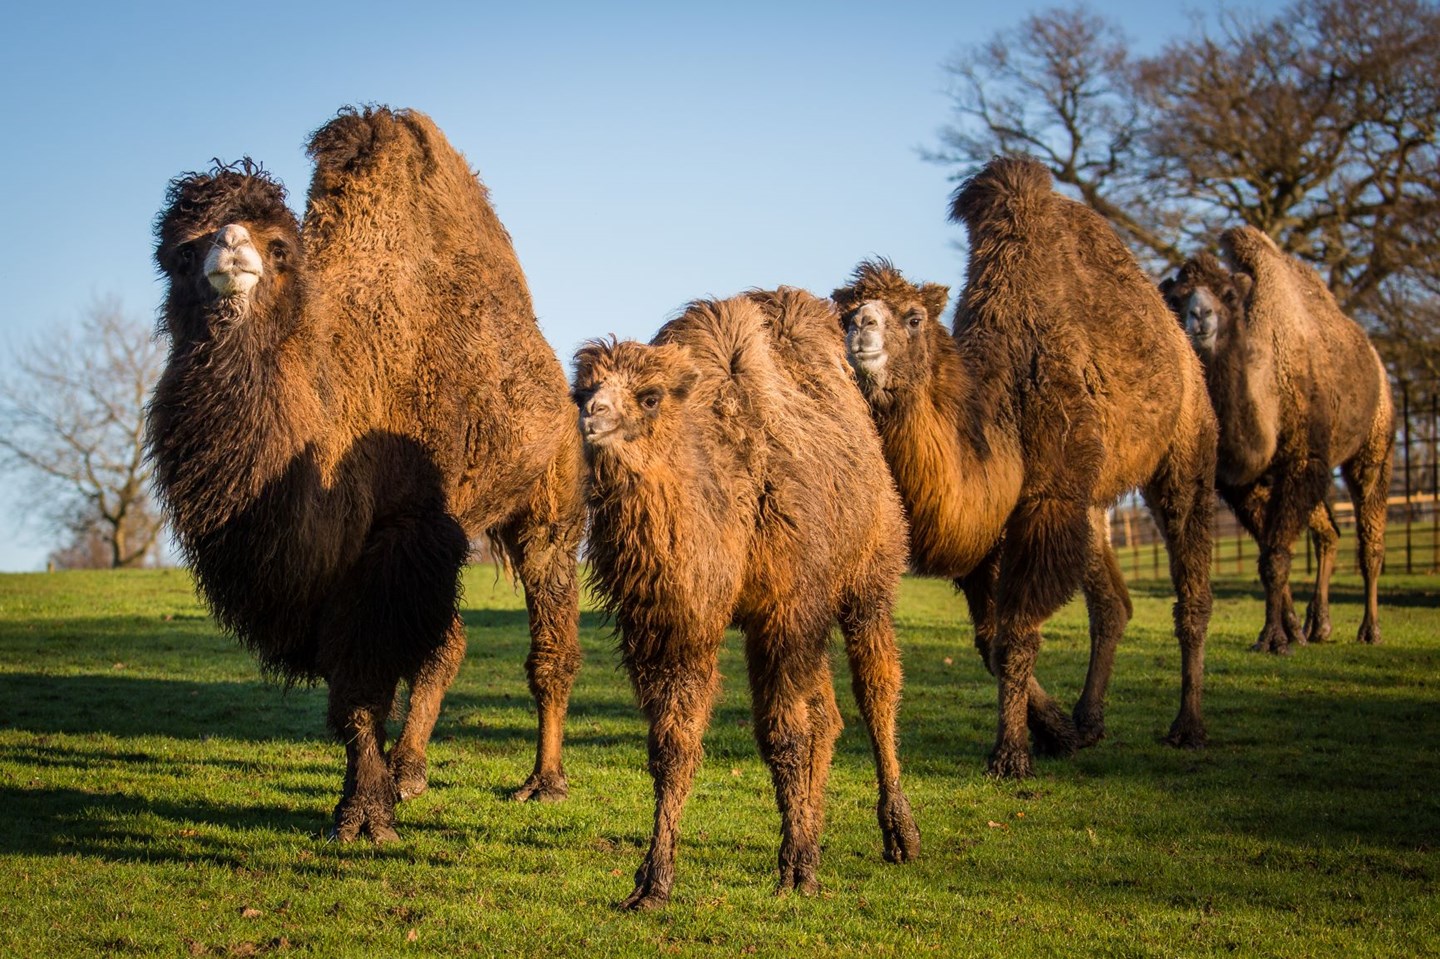 Bactrian camel held walk across expansive grassy enclosure 